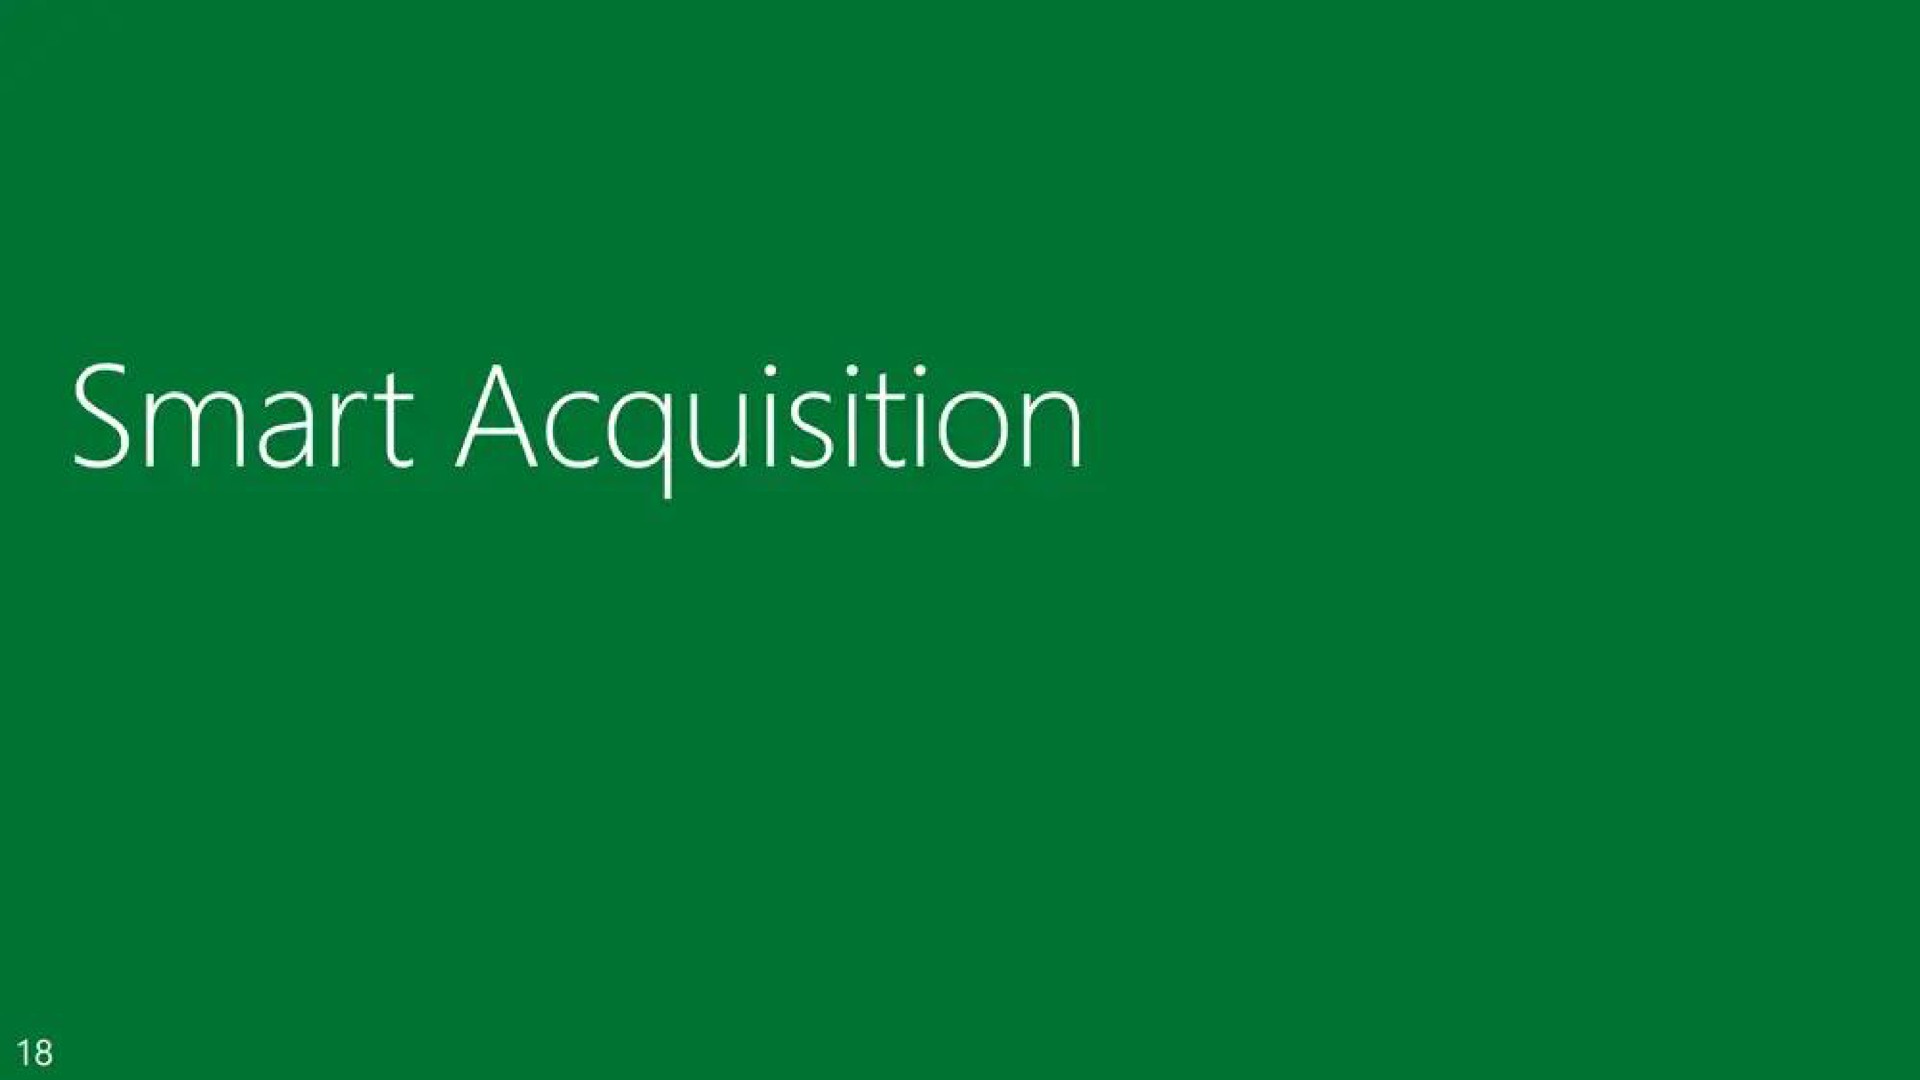 smart acquisition | Microsoft